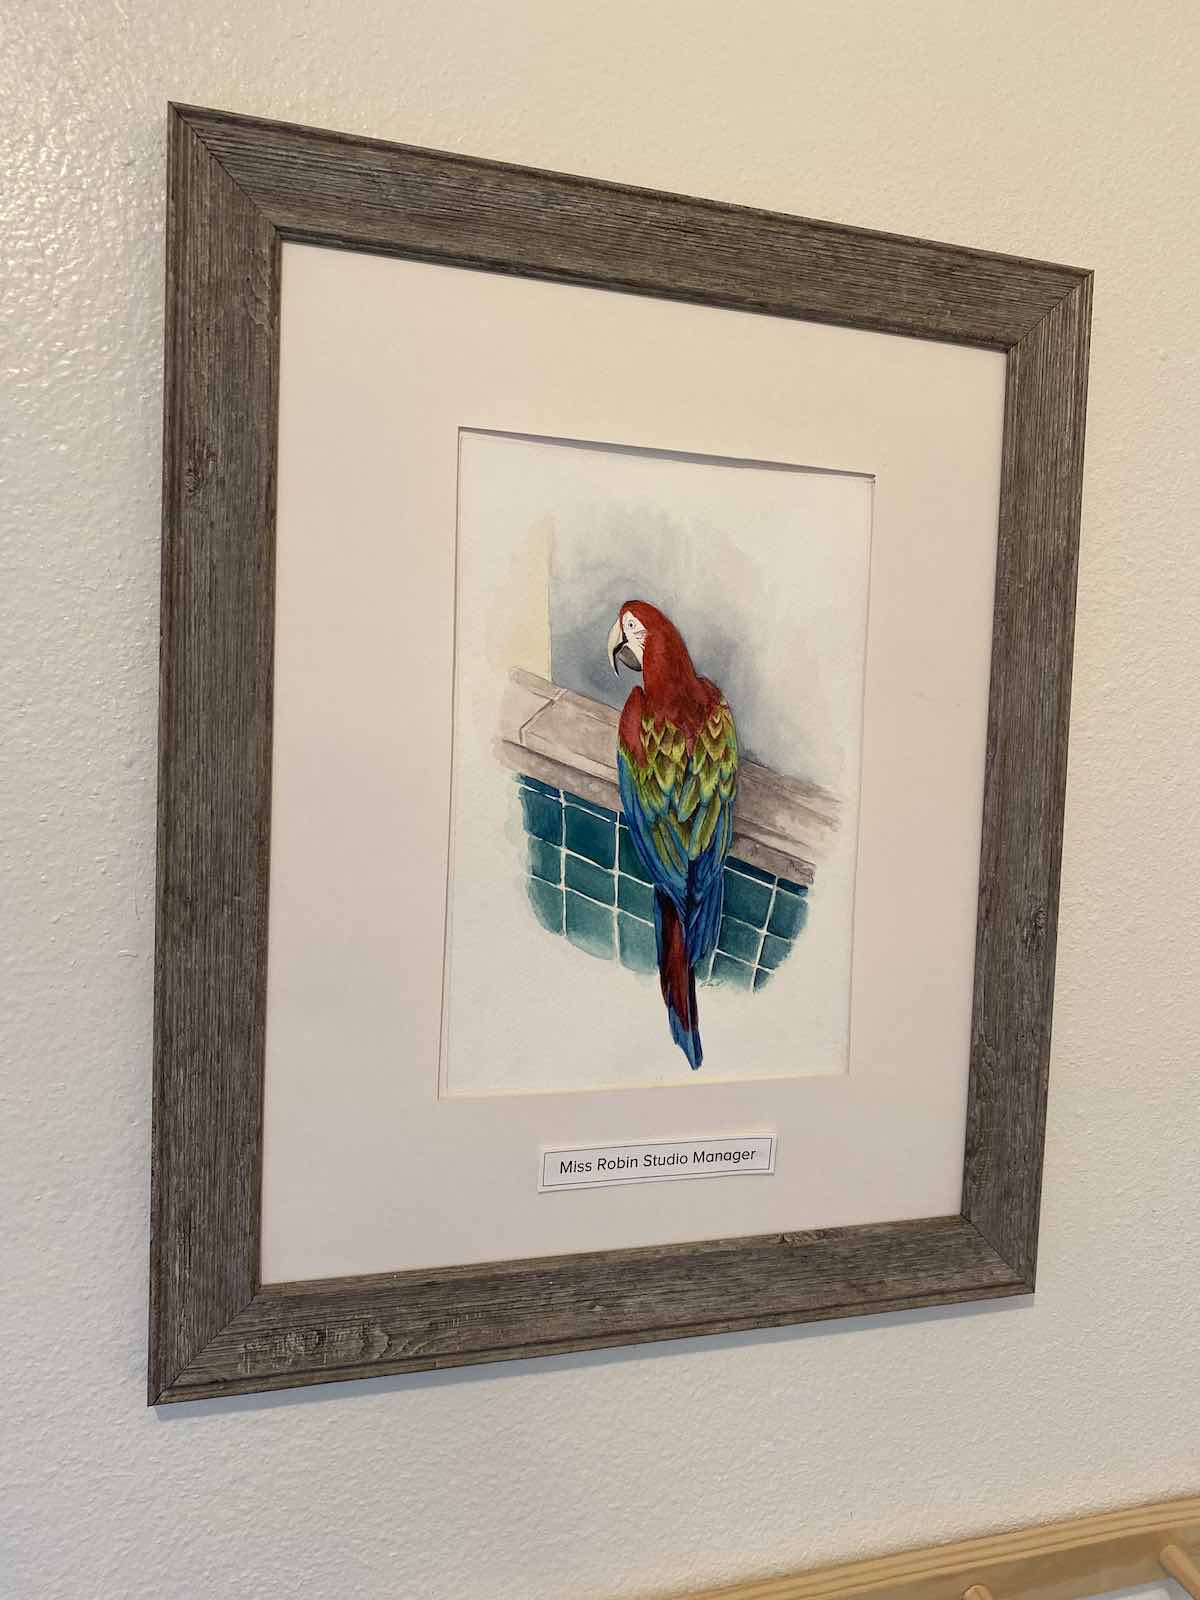 I Heart Costa Mesa: Colorful bird art by studio manager, Robin, on display at ArtSteps Costa Mesa in Orange County, California. (photo: Samantha Chagollan)